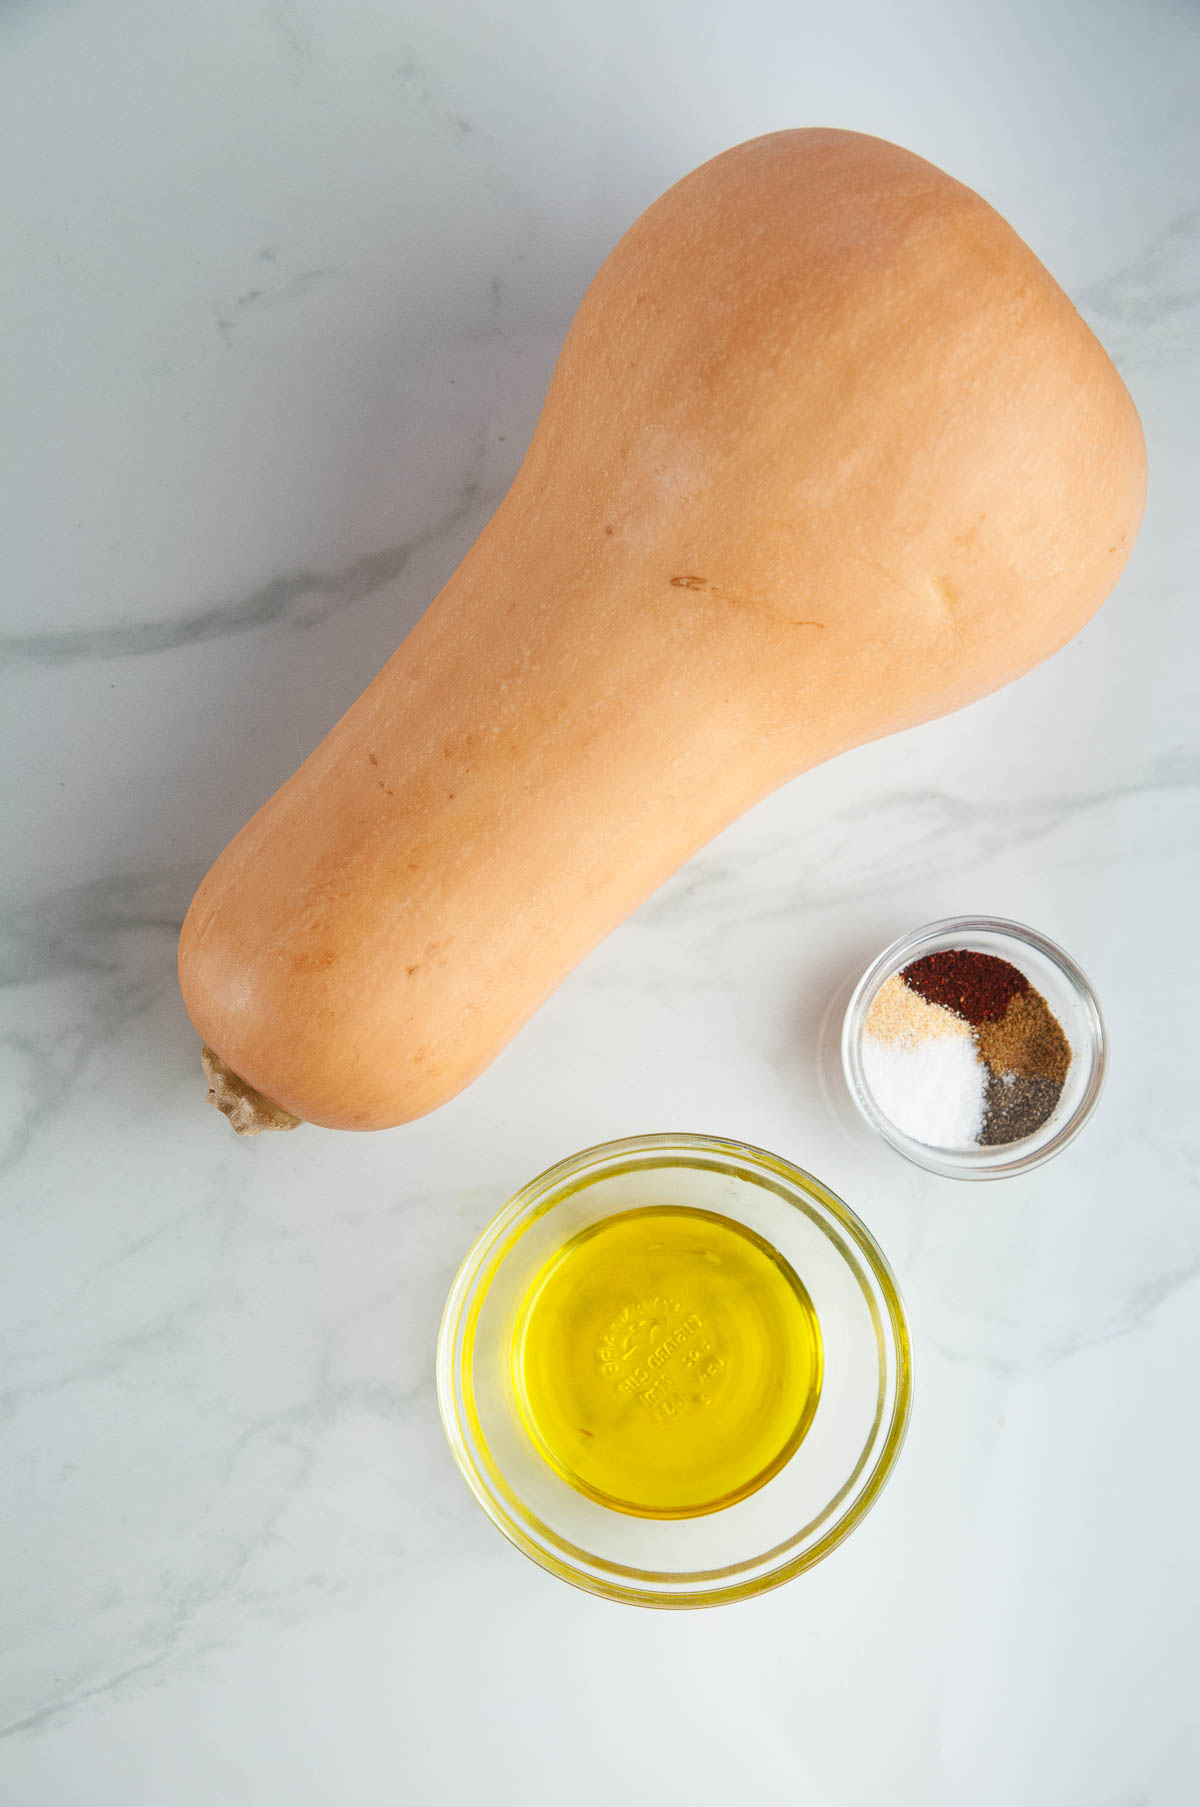 Ingredients for Savory Spiced Butternut Squash: Butternut Squash, Garlic Powder, Cumin, Chili Powder, Salt and Pepper, and Olive Oil